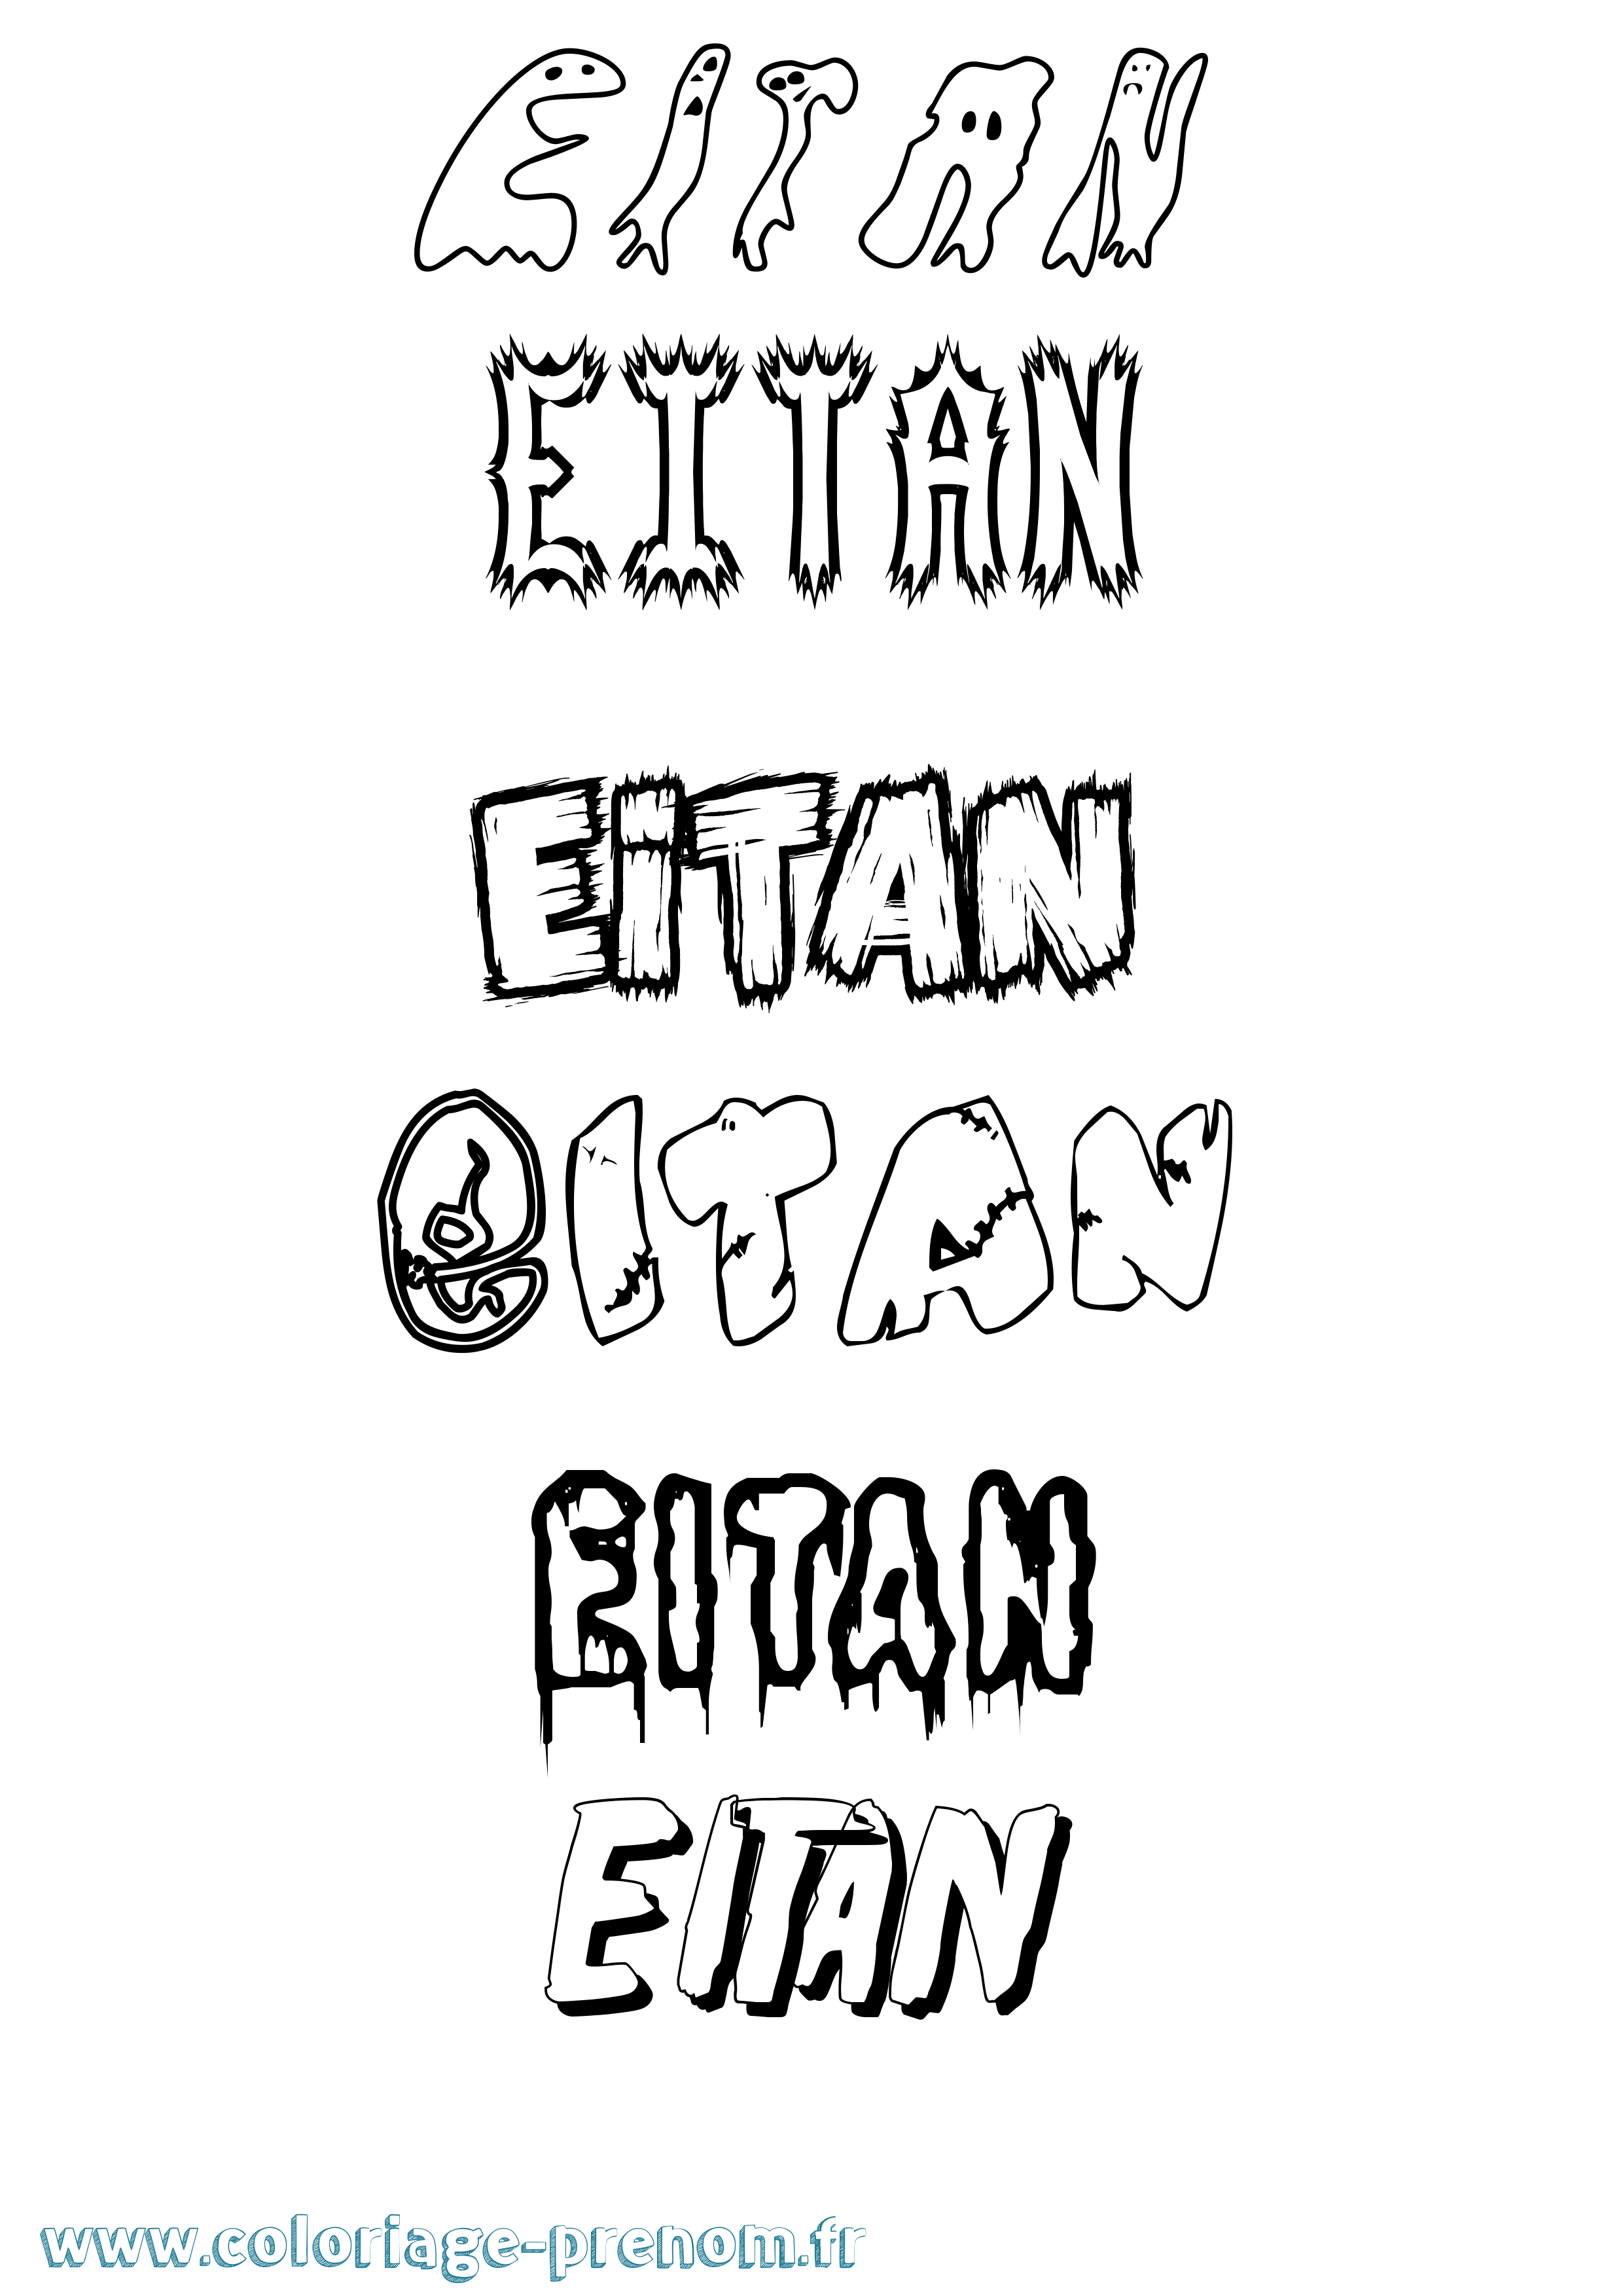 Coloriage prénom Eitan Frisson